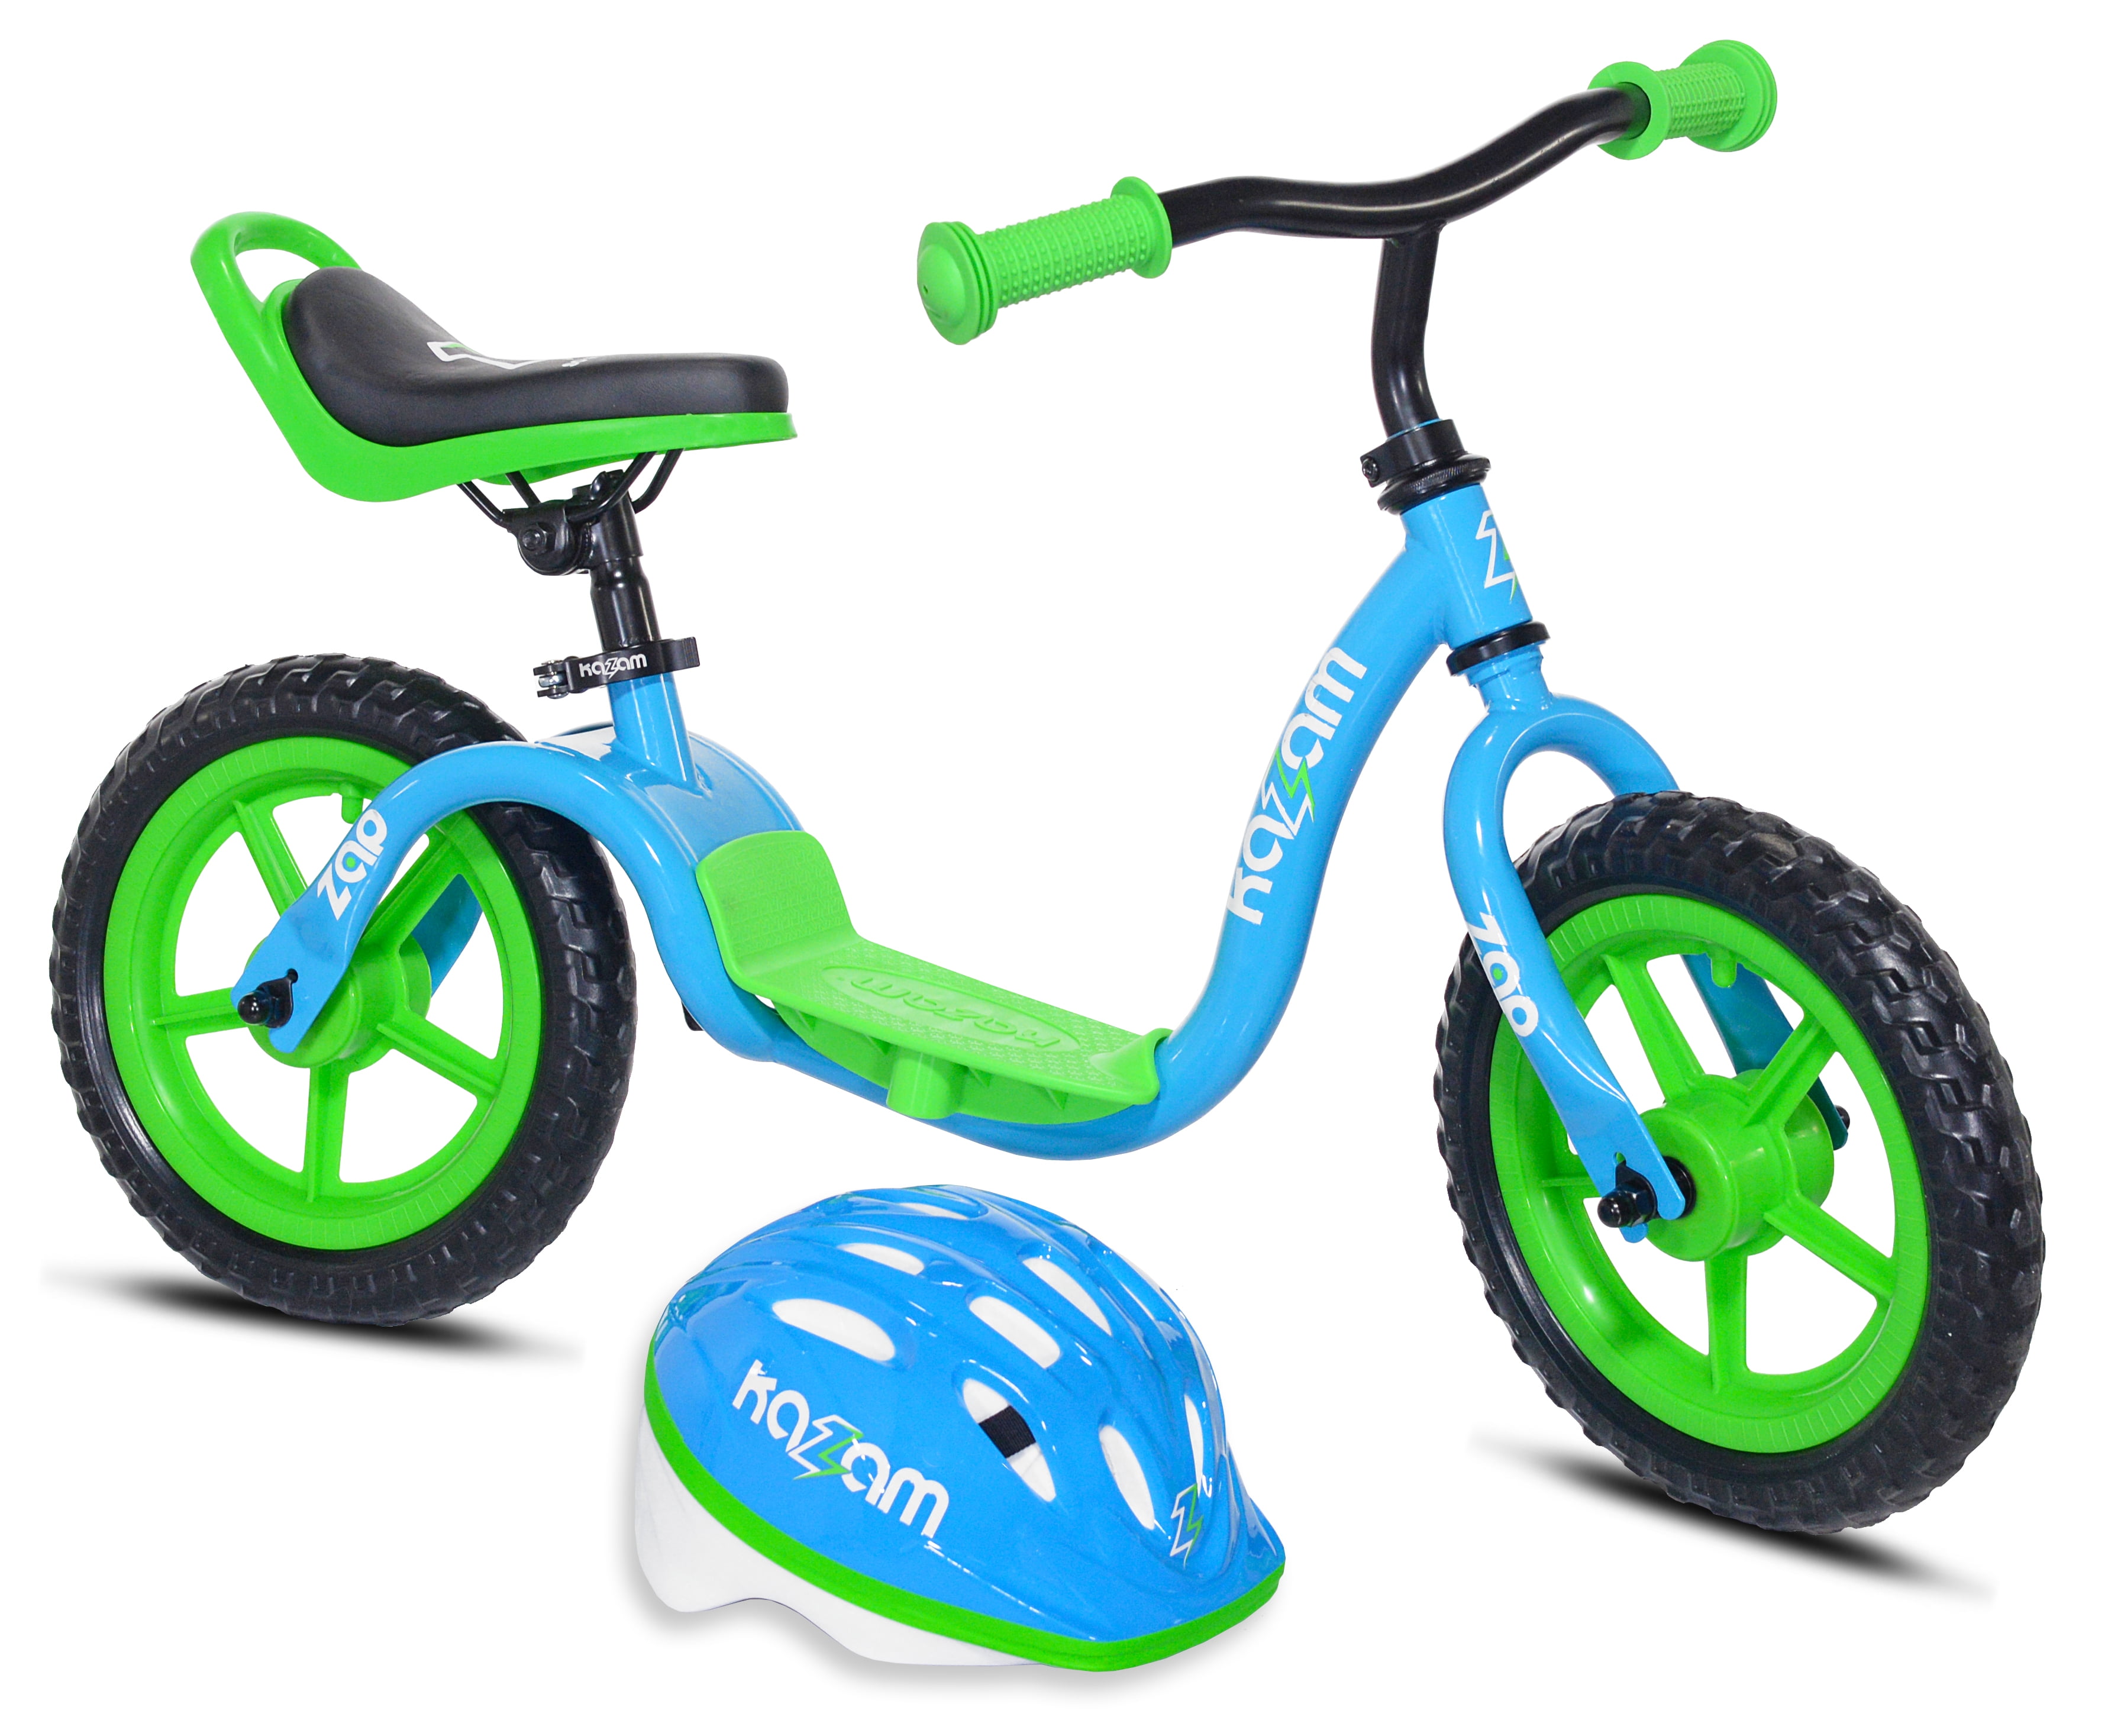 KaZAM Tyro V2E Step-Through Learning Balance Bike for Kids Open Box White 